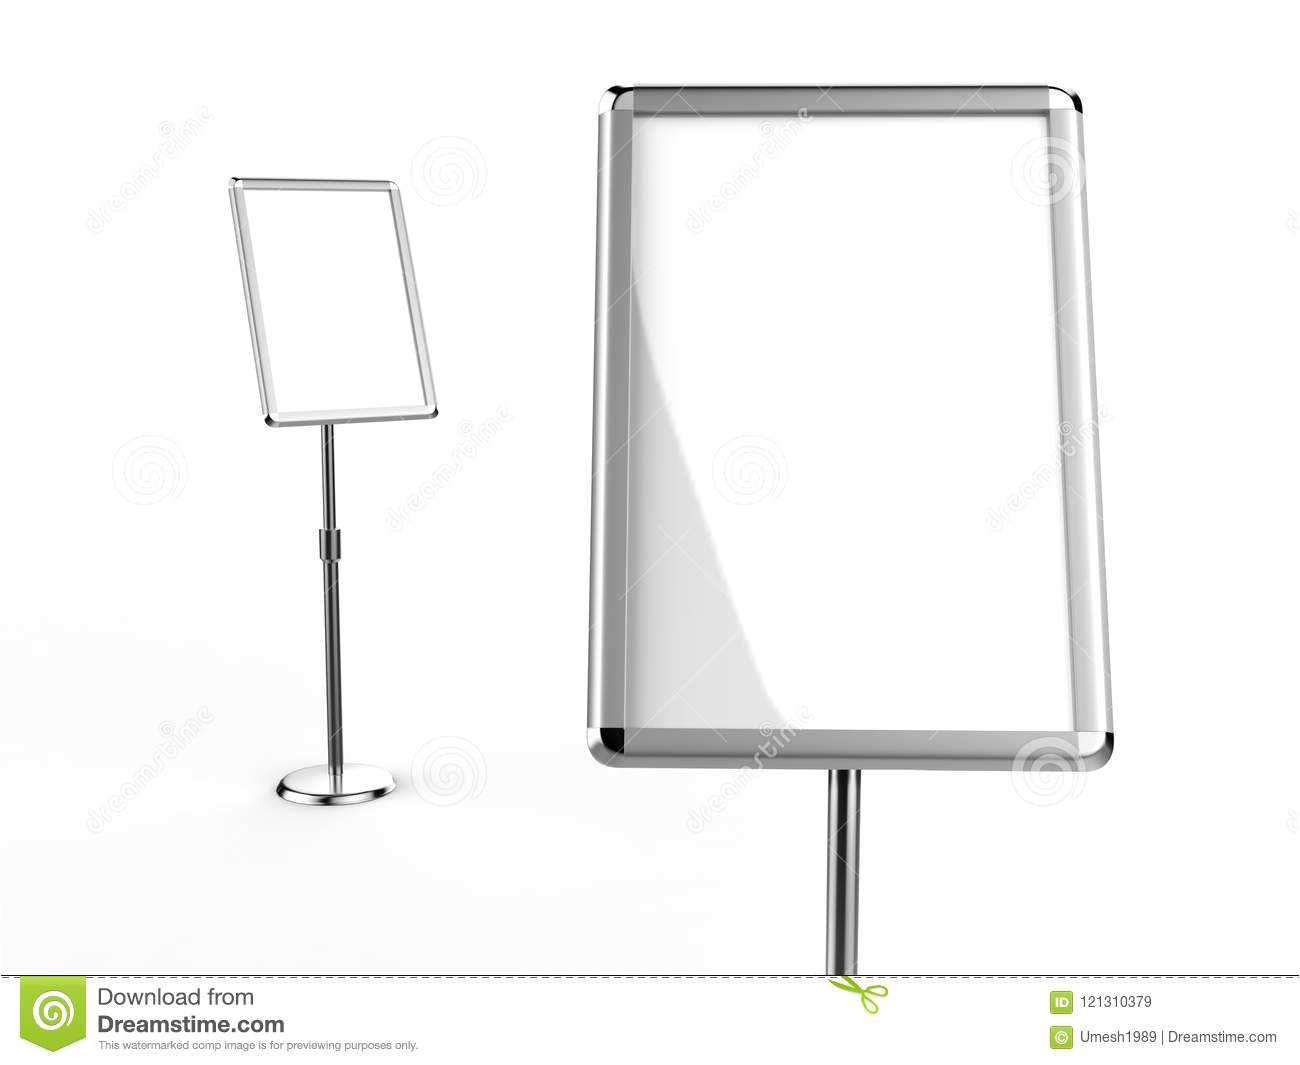 a3 a4 floor standing menu poster display holder snap frame restaurant stand advertisement sign holder